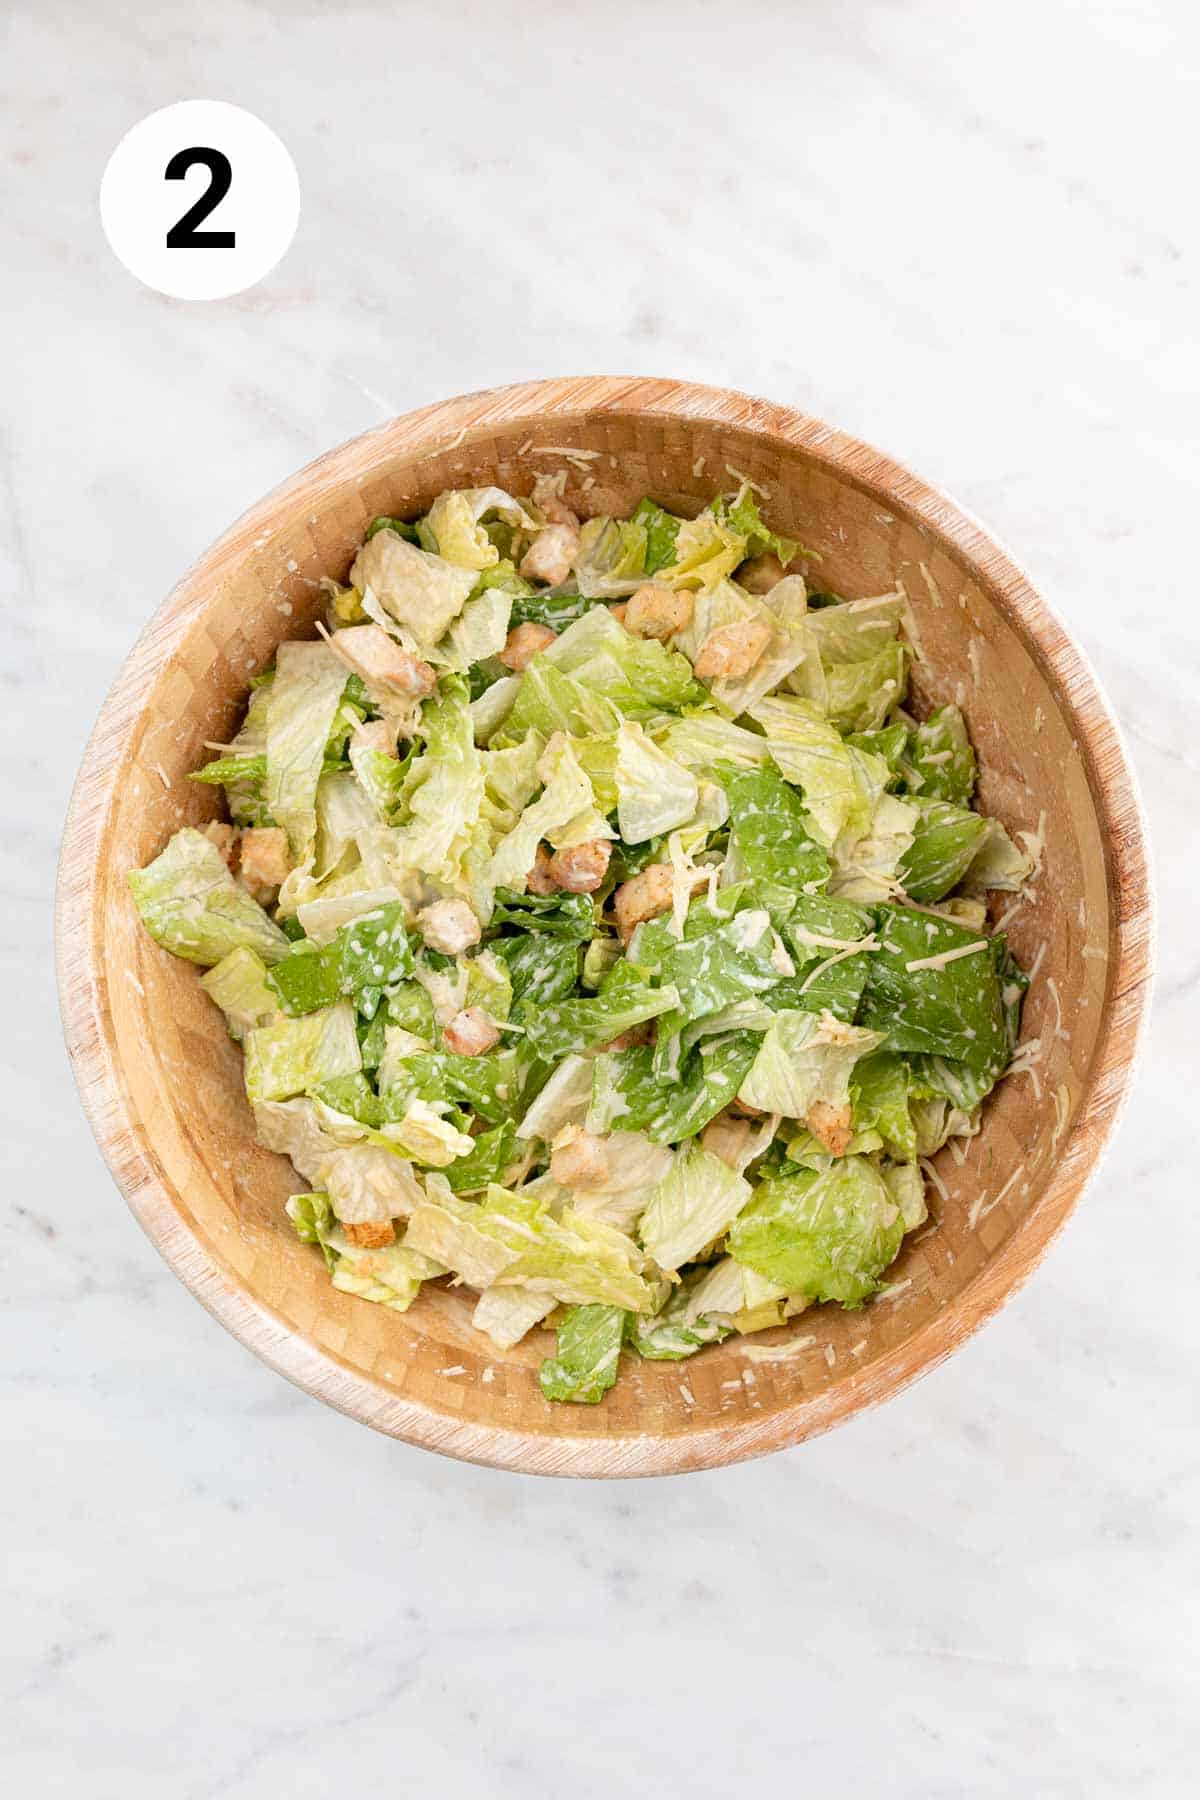 Mixed vegan Caesar salad ingredients in a bowl.